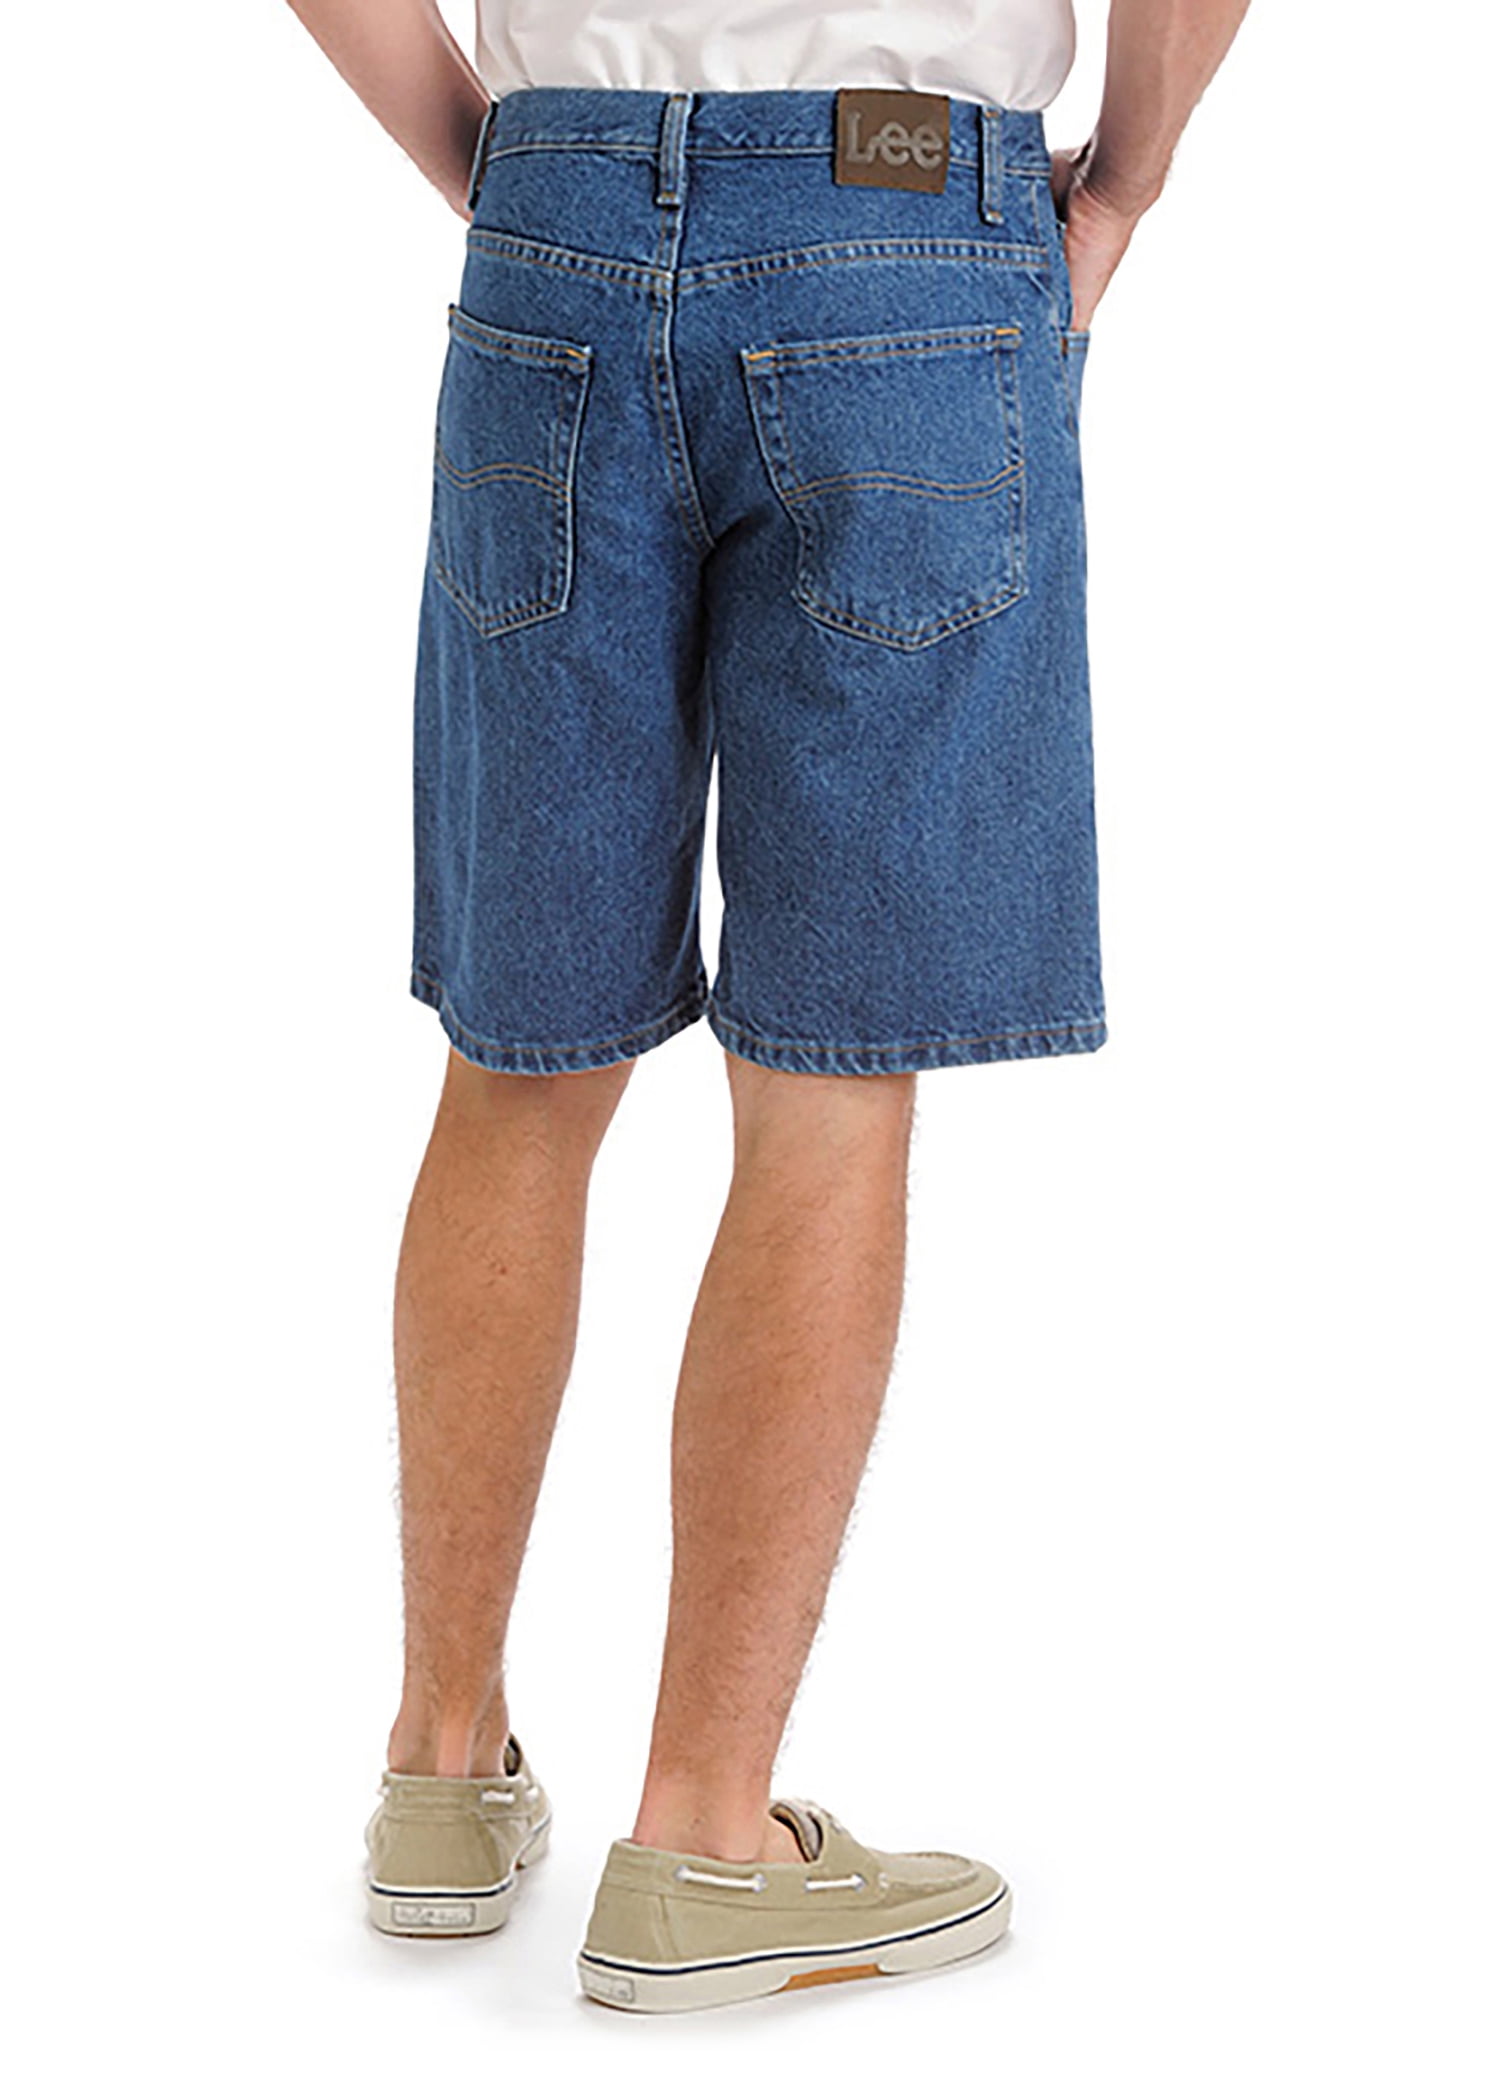 lee jean shorts